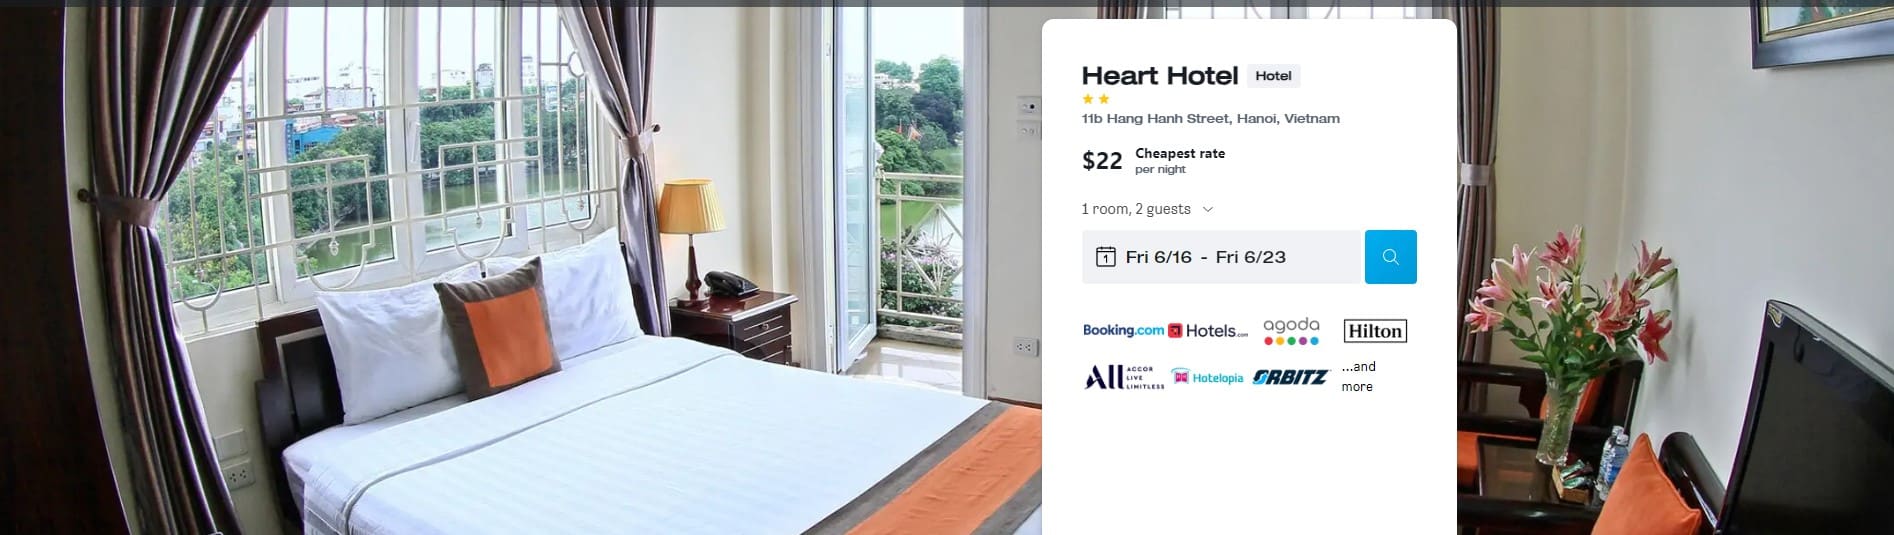 Heart Hotel